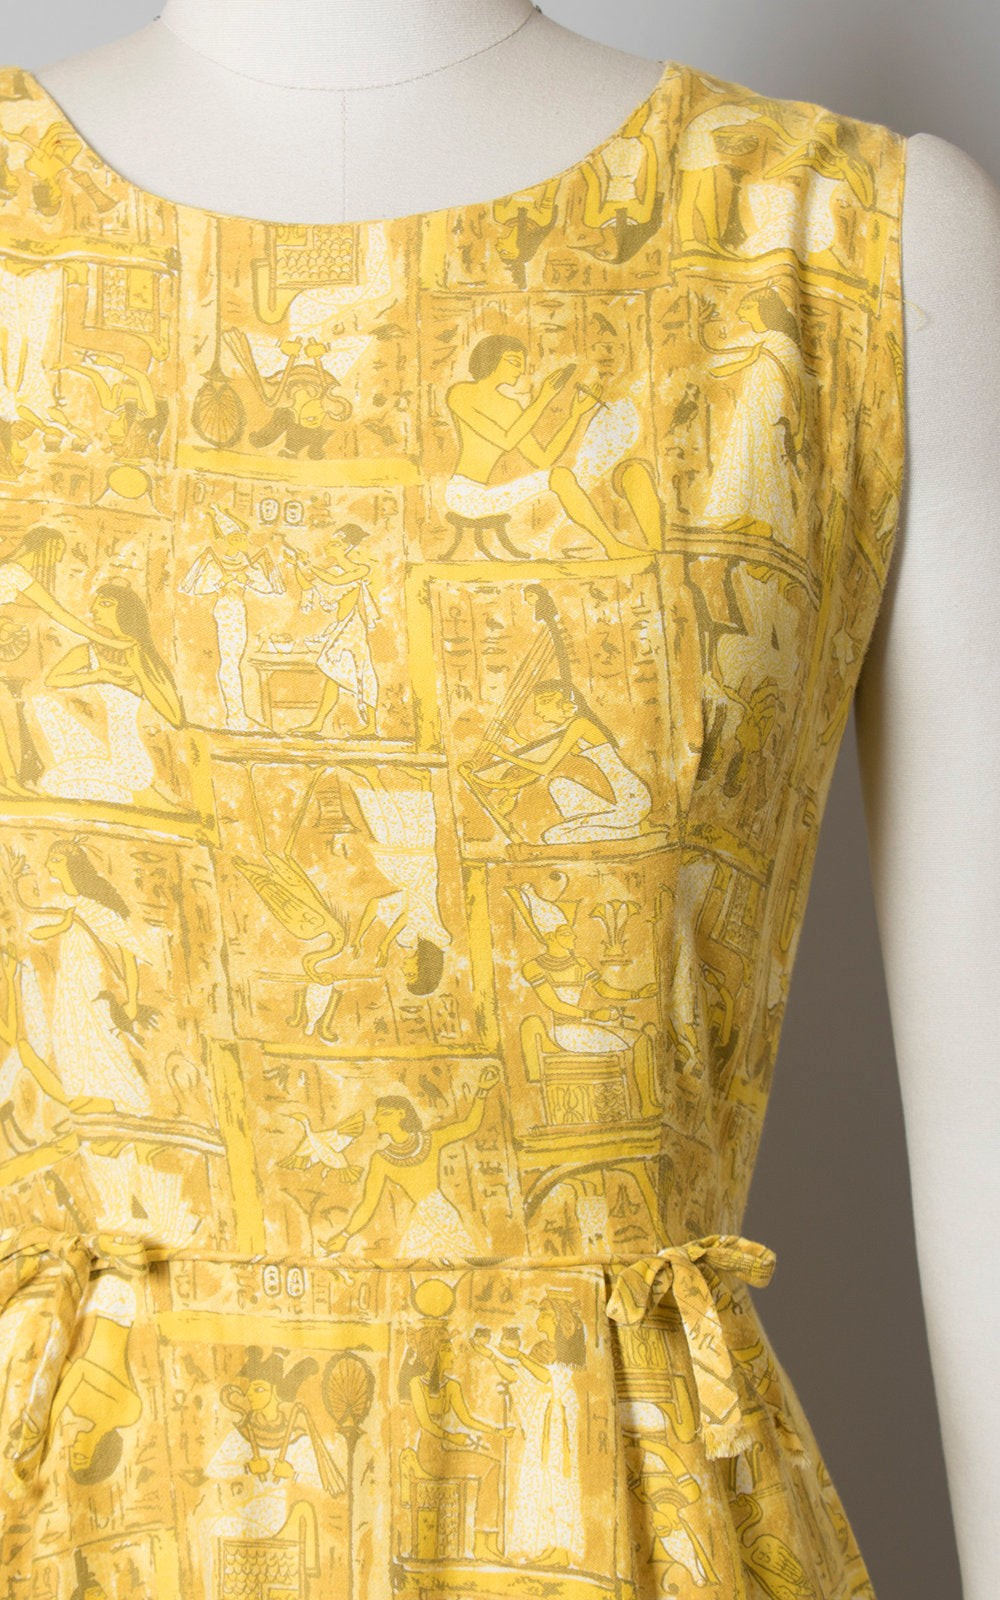 Vintage 1950s 1960s Dress | 50s 60s Egyptian Novelty Print Cotton Sheath Sundress Yellow Wiggle Day Dress (medium)